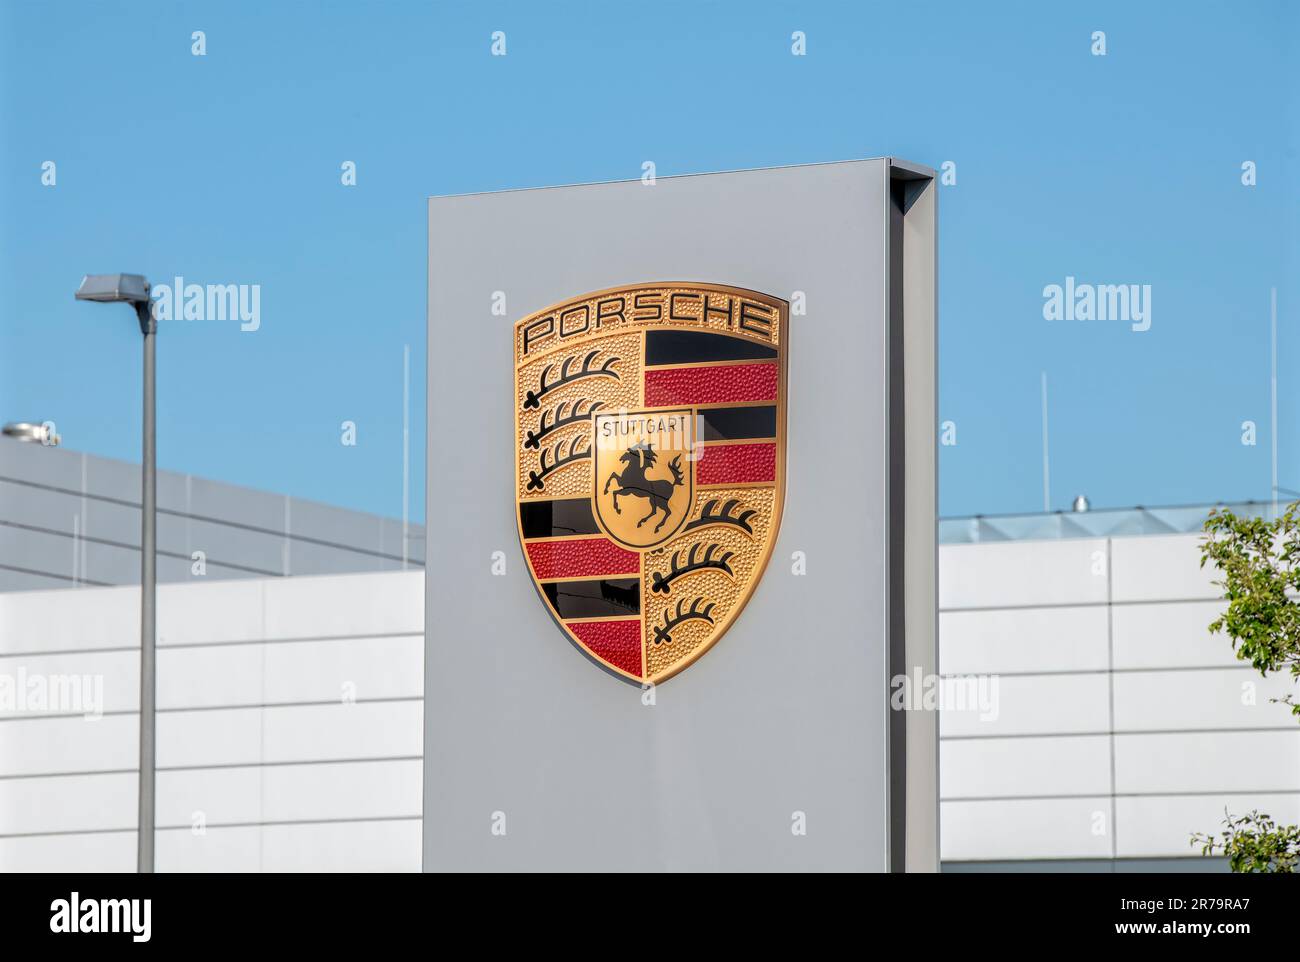 Logo of the car manufacturer Porsche on a car dealership Stock Photo